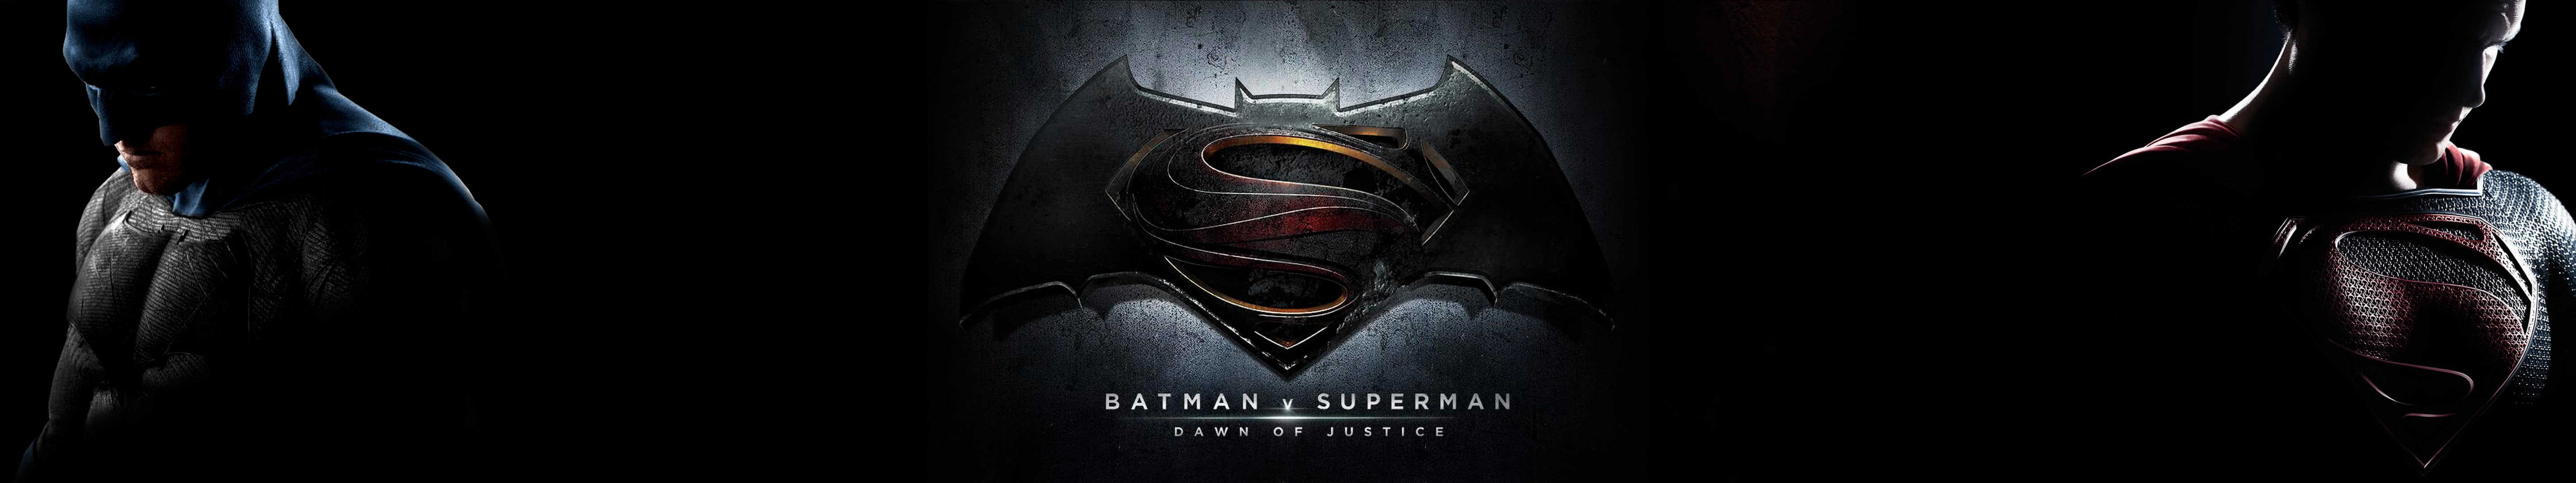 batman v superman dawn of justice triple monitor wallpaper